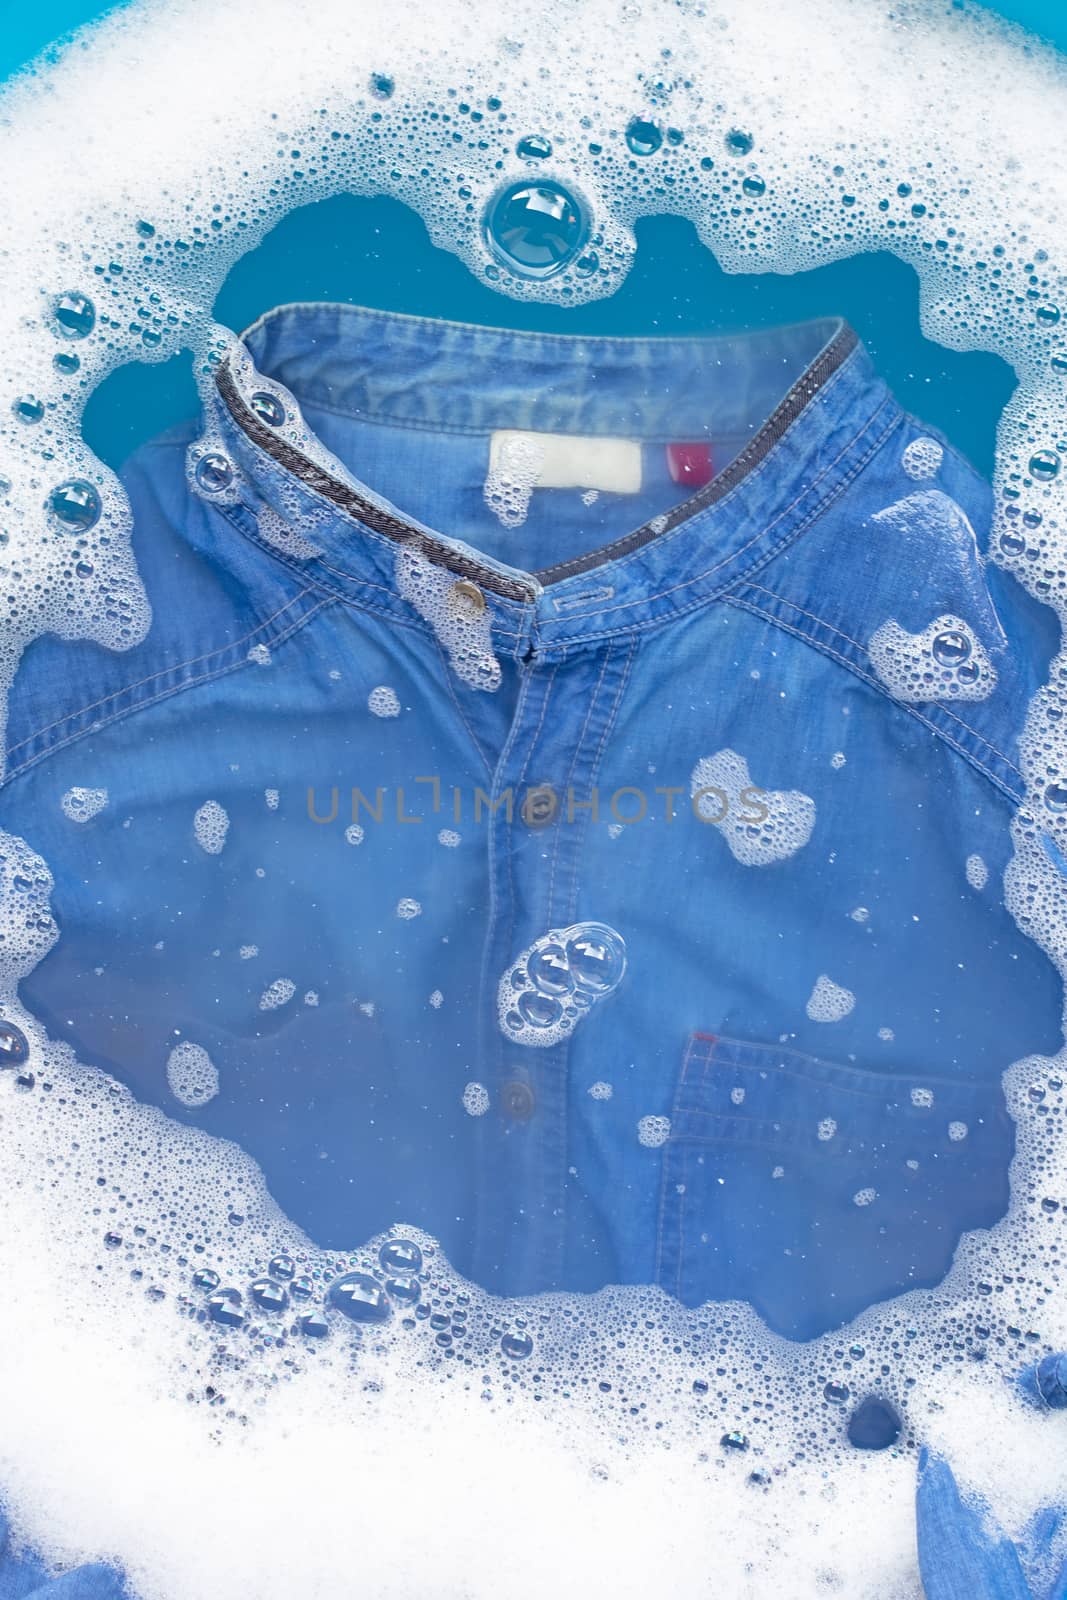 Jean shirt soak in powder detergent water dissolution. Laundry concept